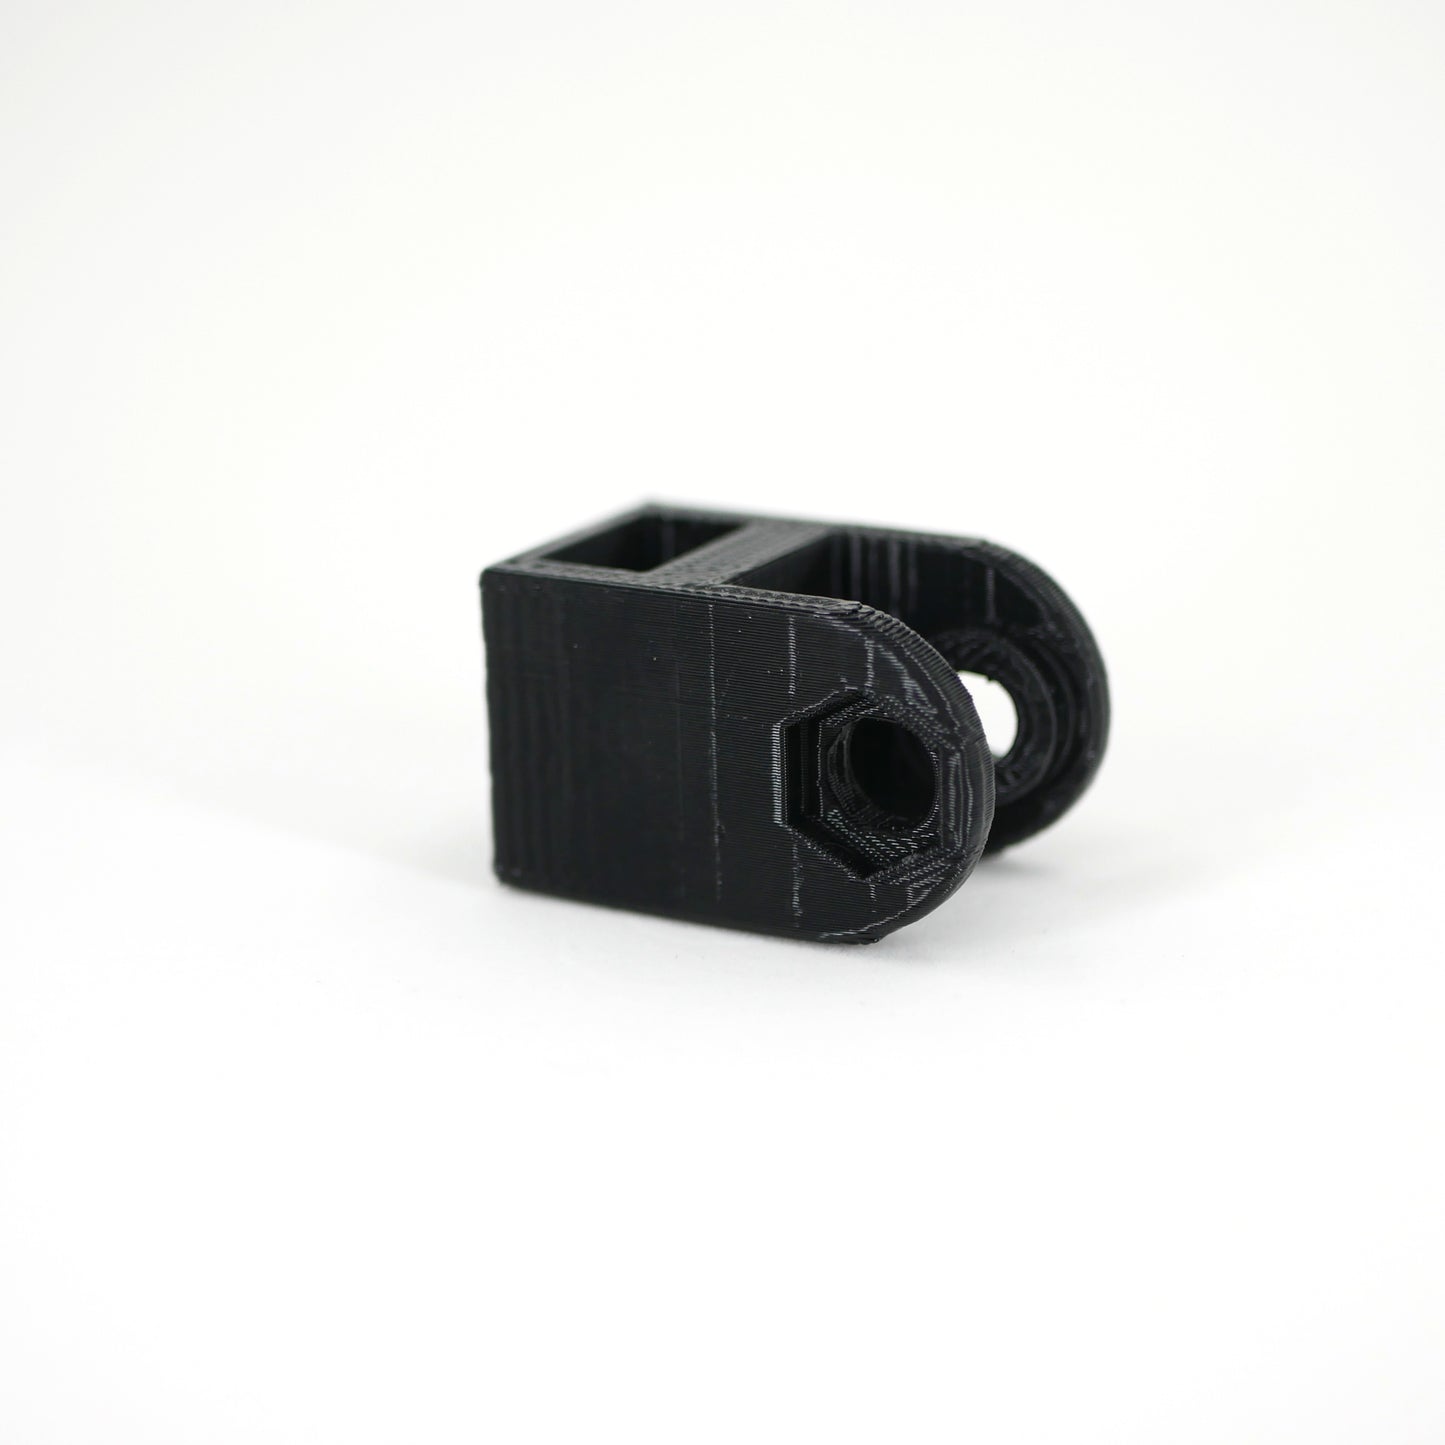 A black HyperX QuadCast microphone mount adapter.